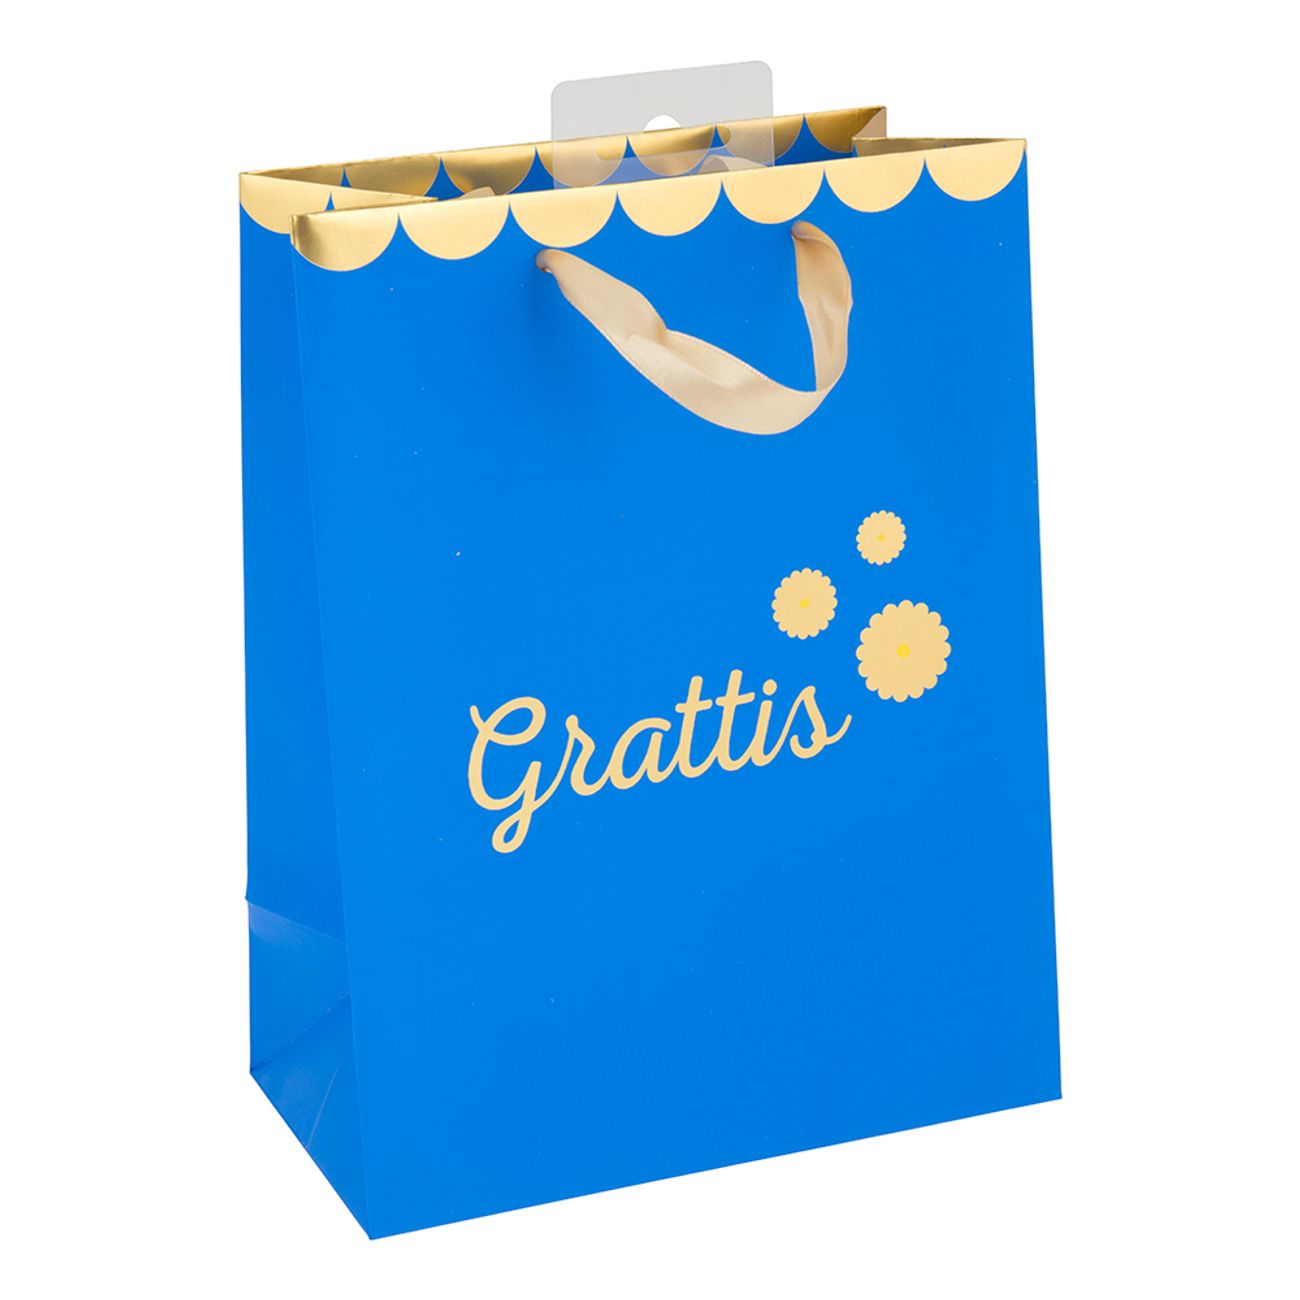 presentpase-grattis-1